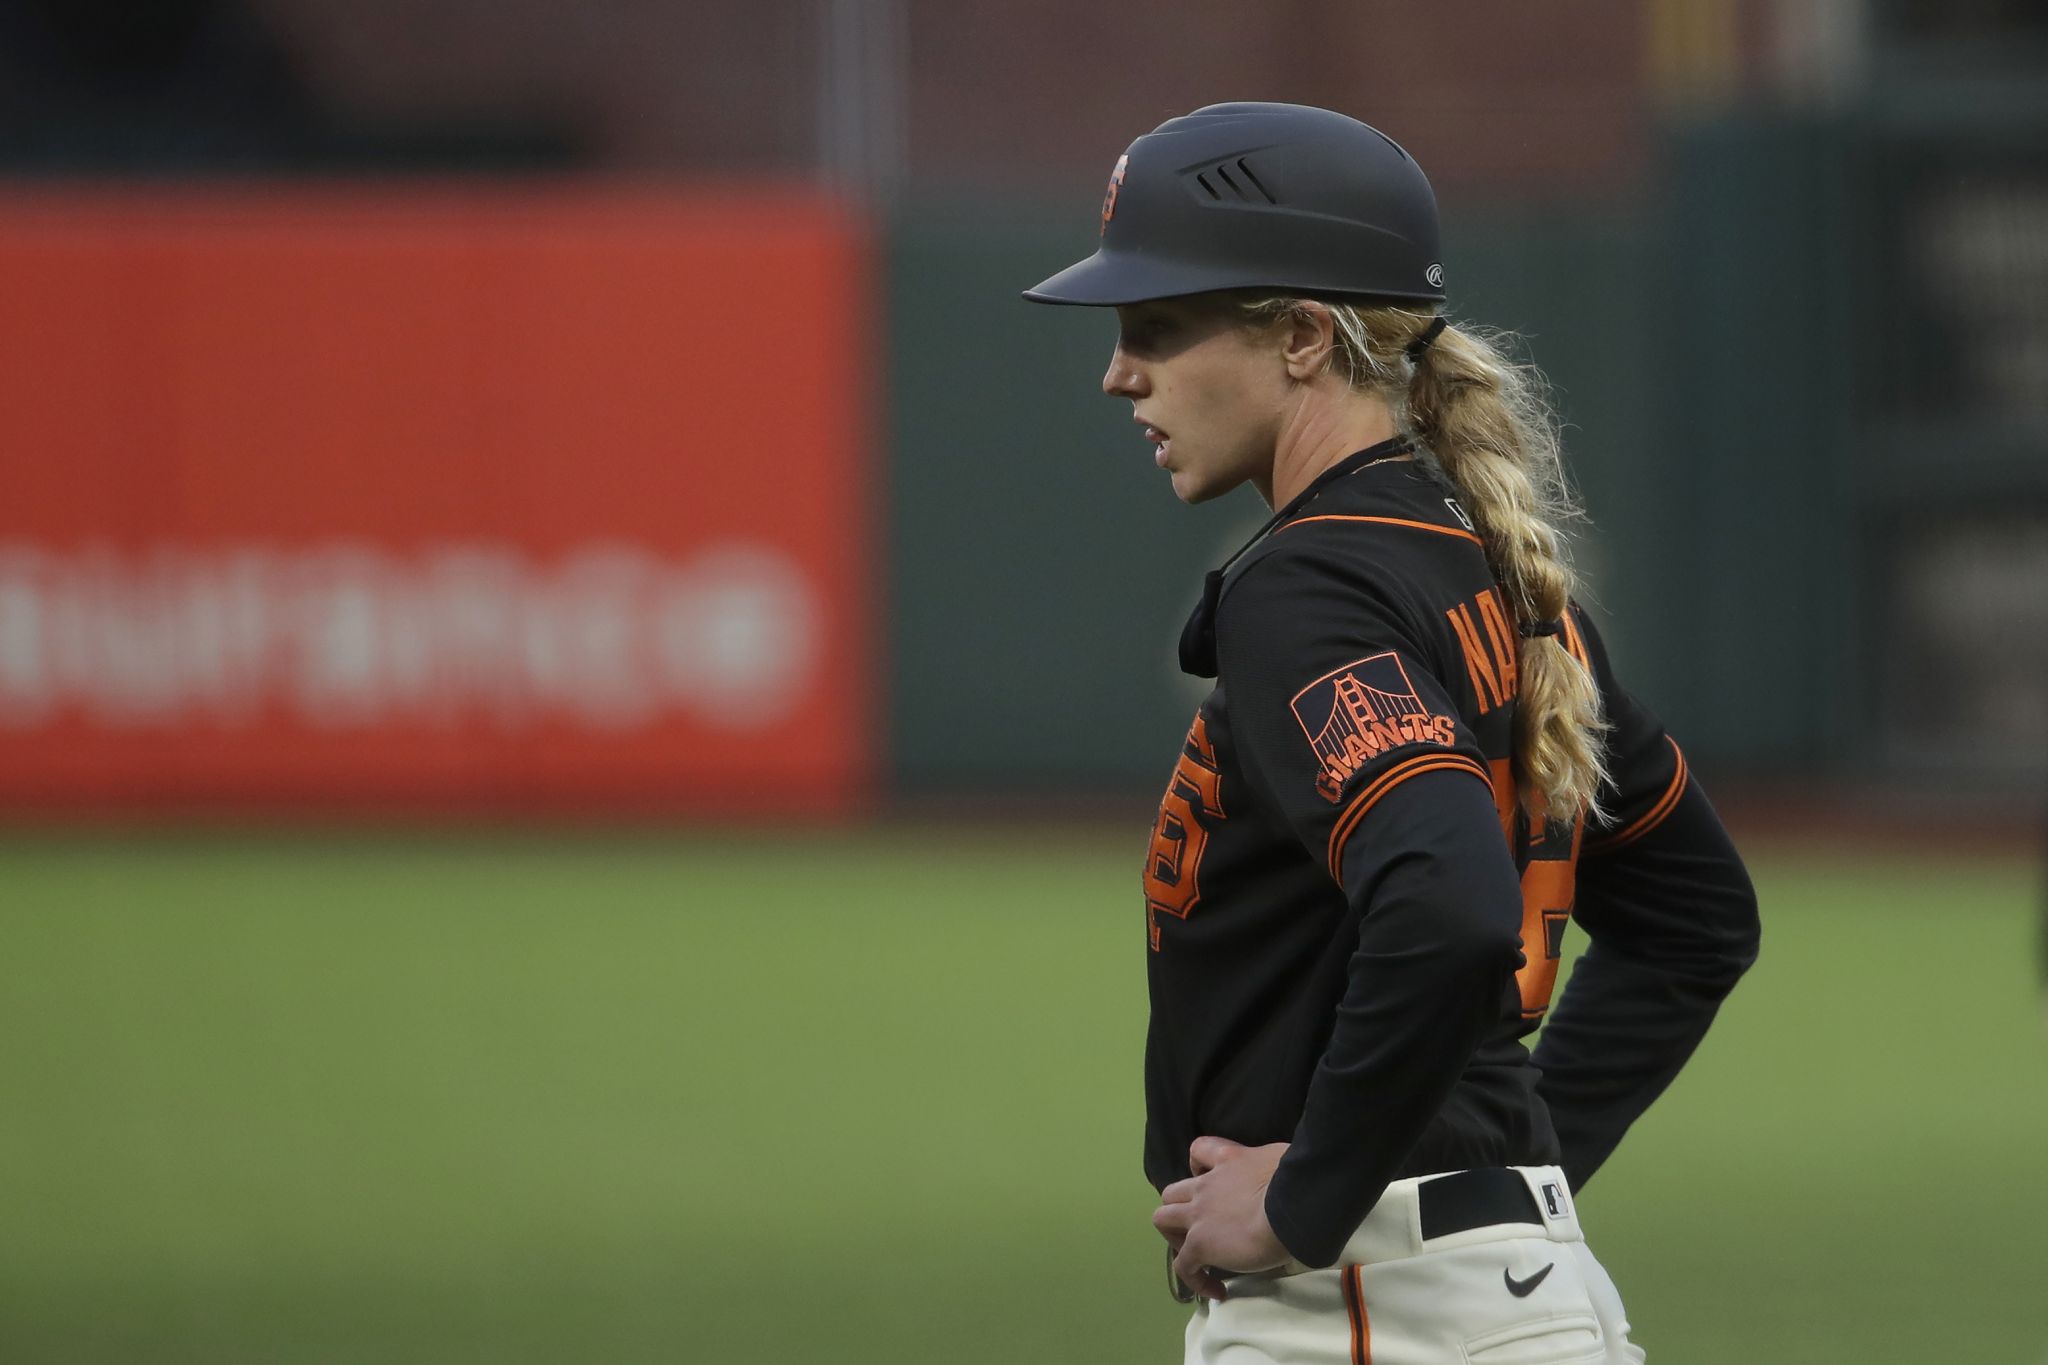 Giants' Alyssa Nakken Becomes MLB's First Female Coach on Field